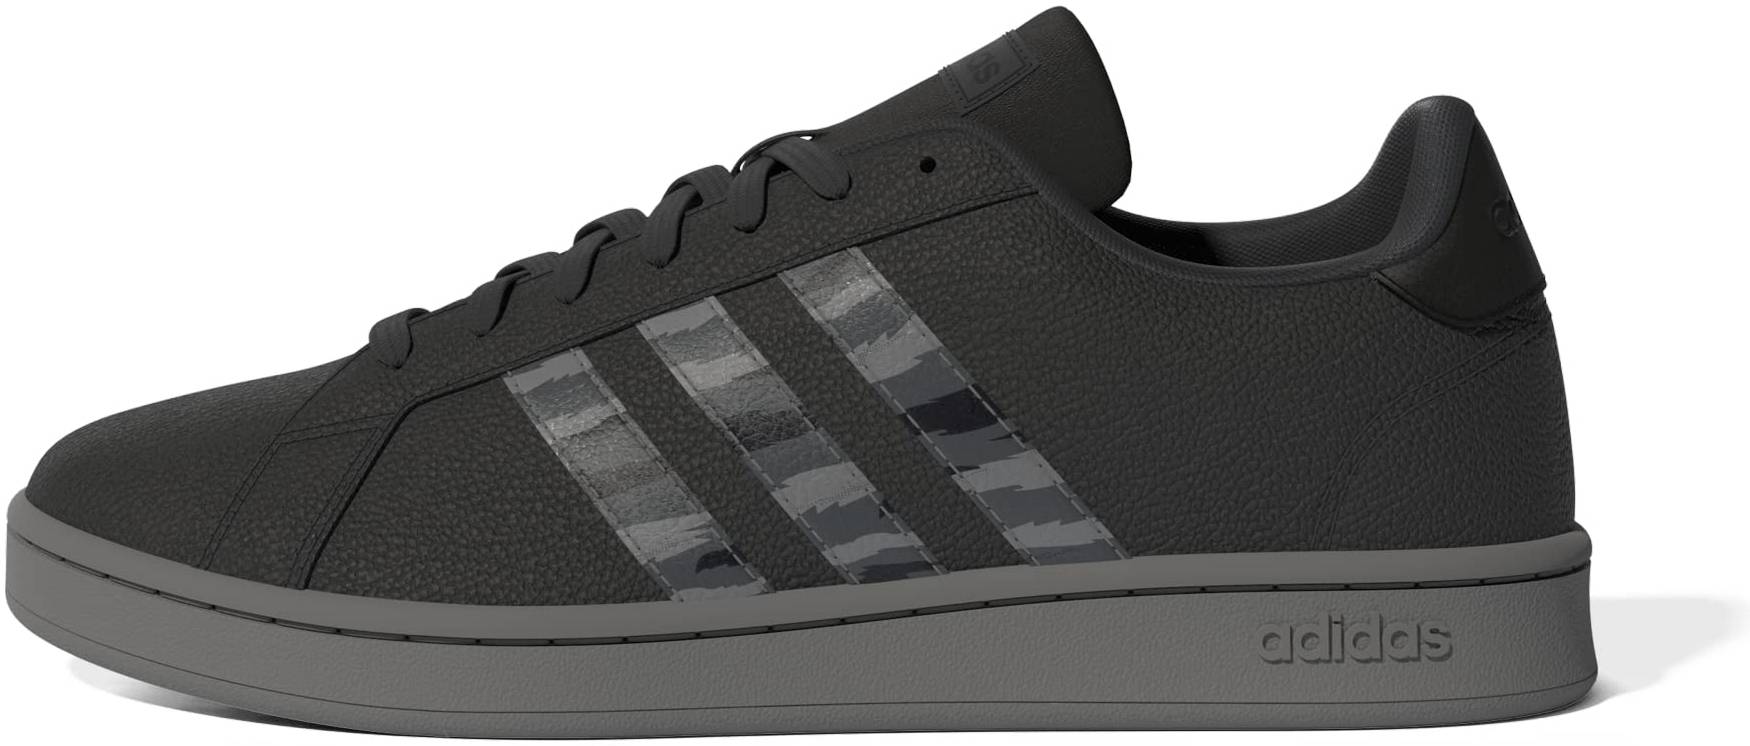 Grey Adidas sneakers: Save to 51% | RunRepeat